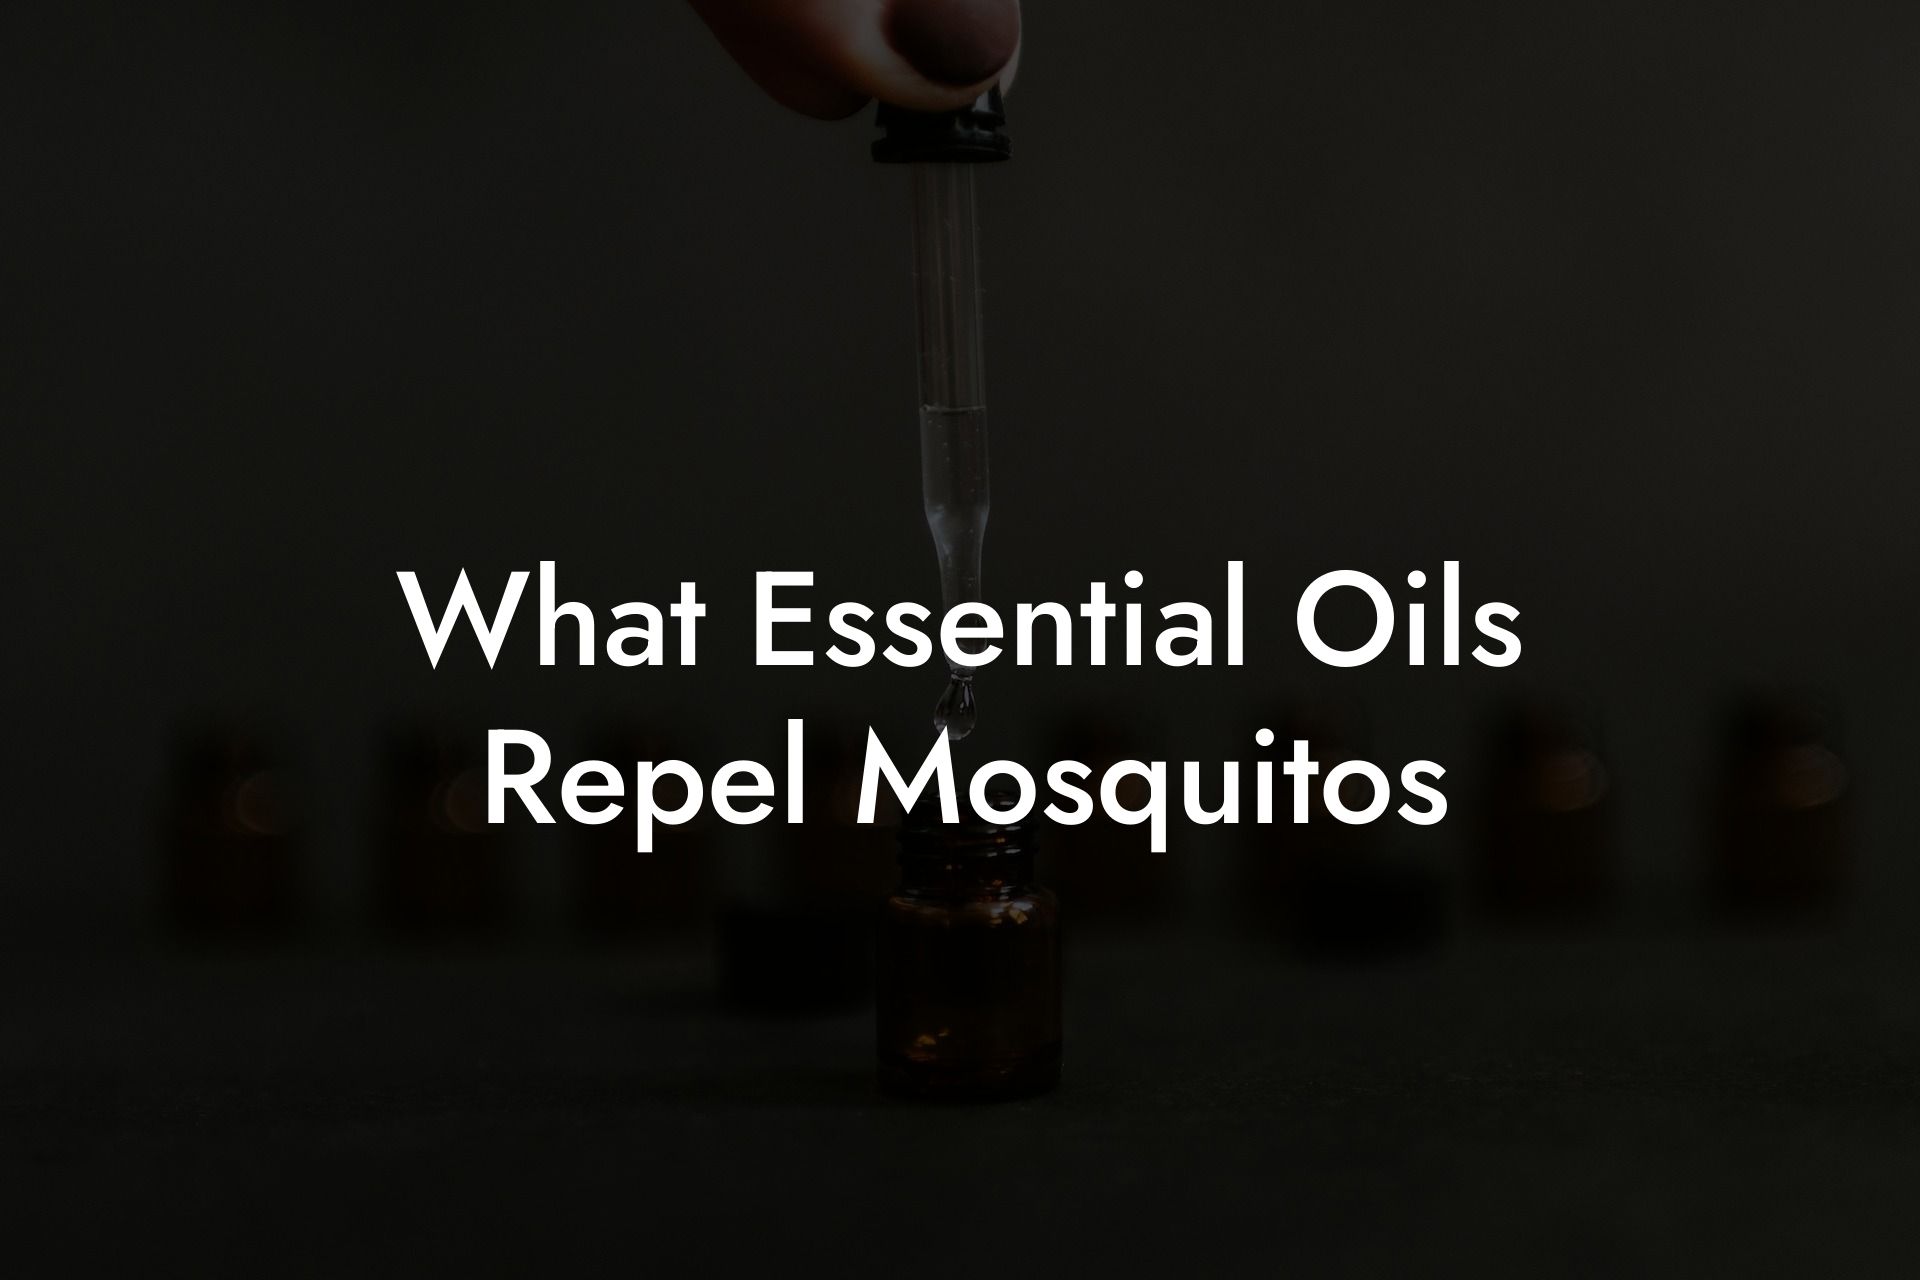 What Essential Oils Repel Mosquitos